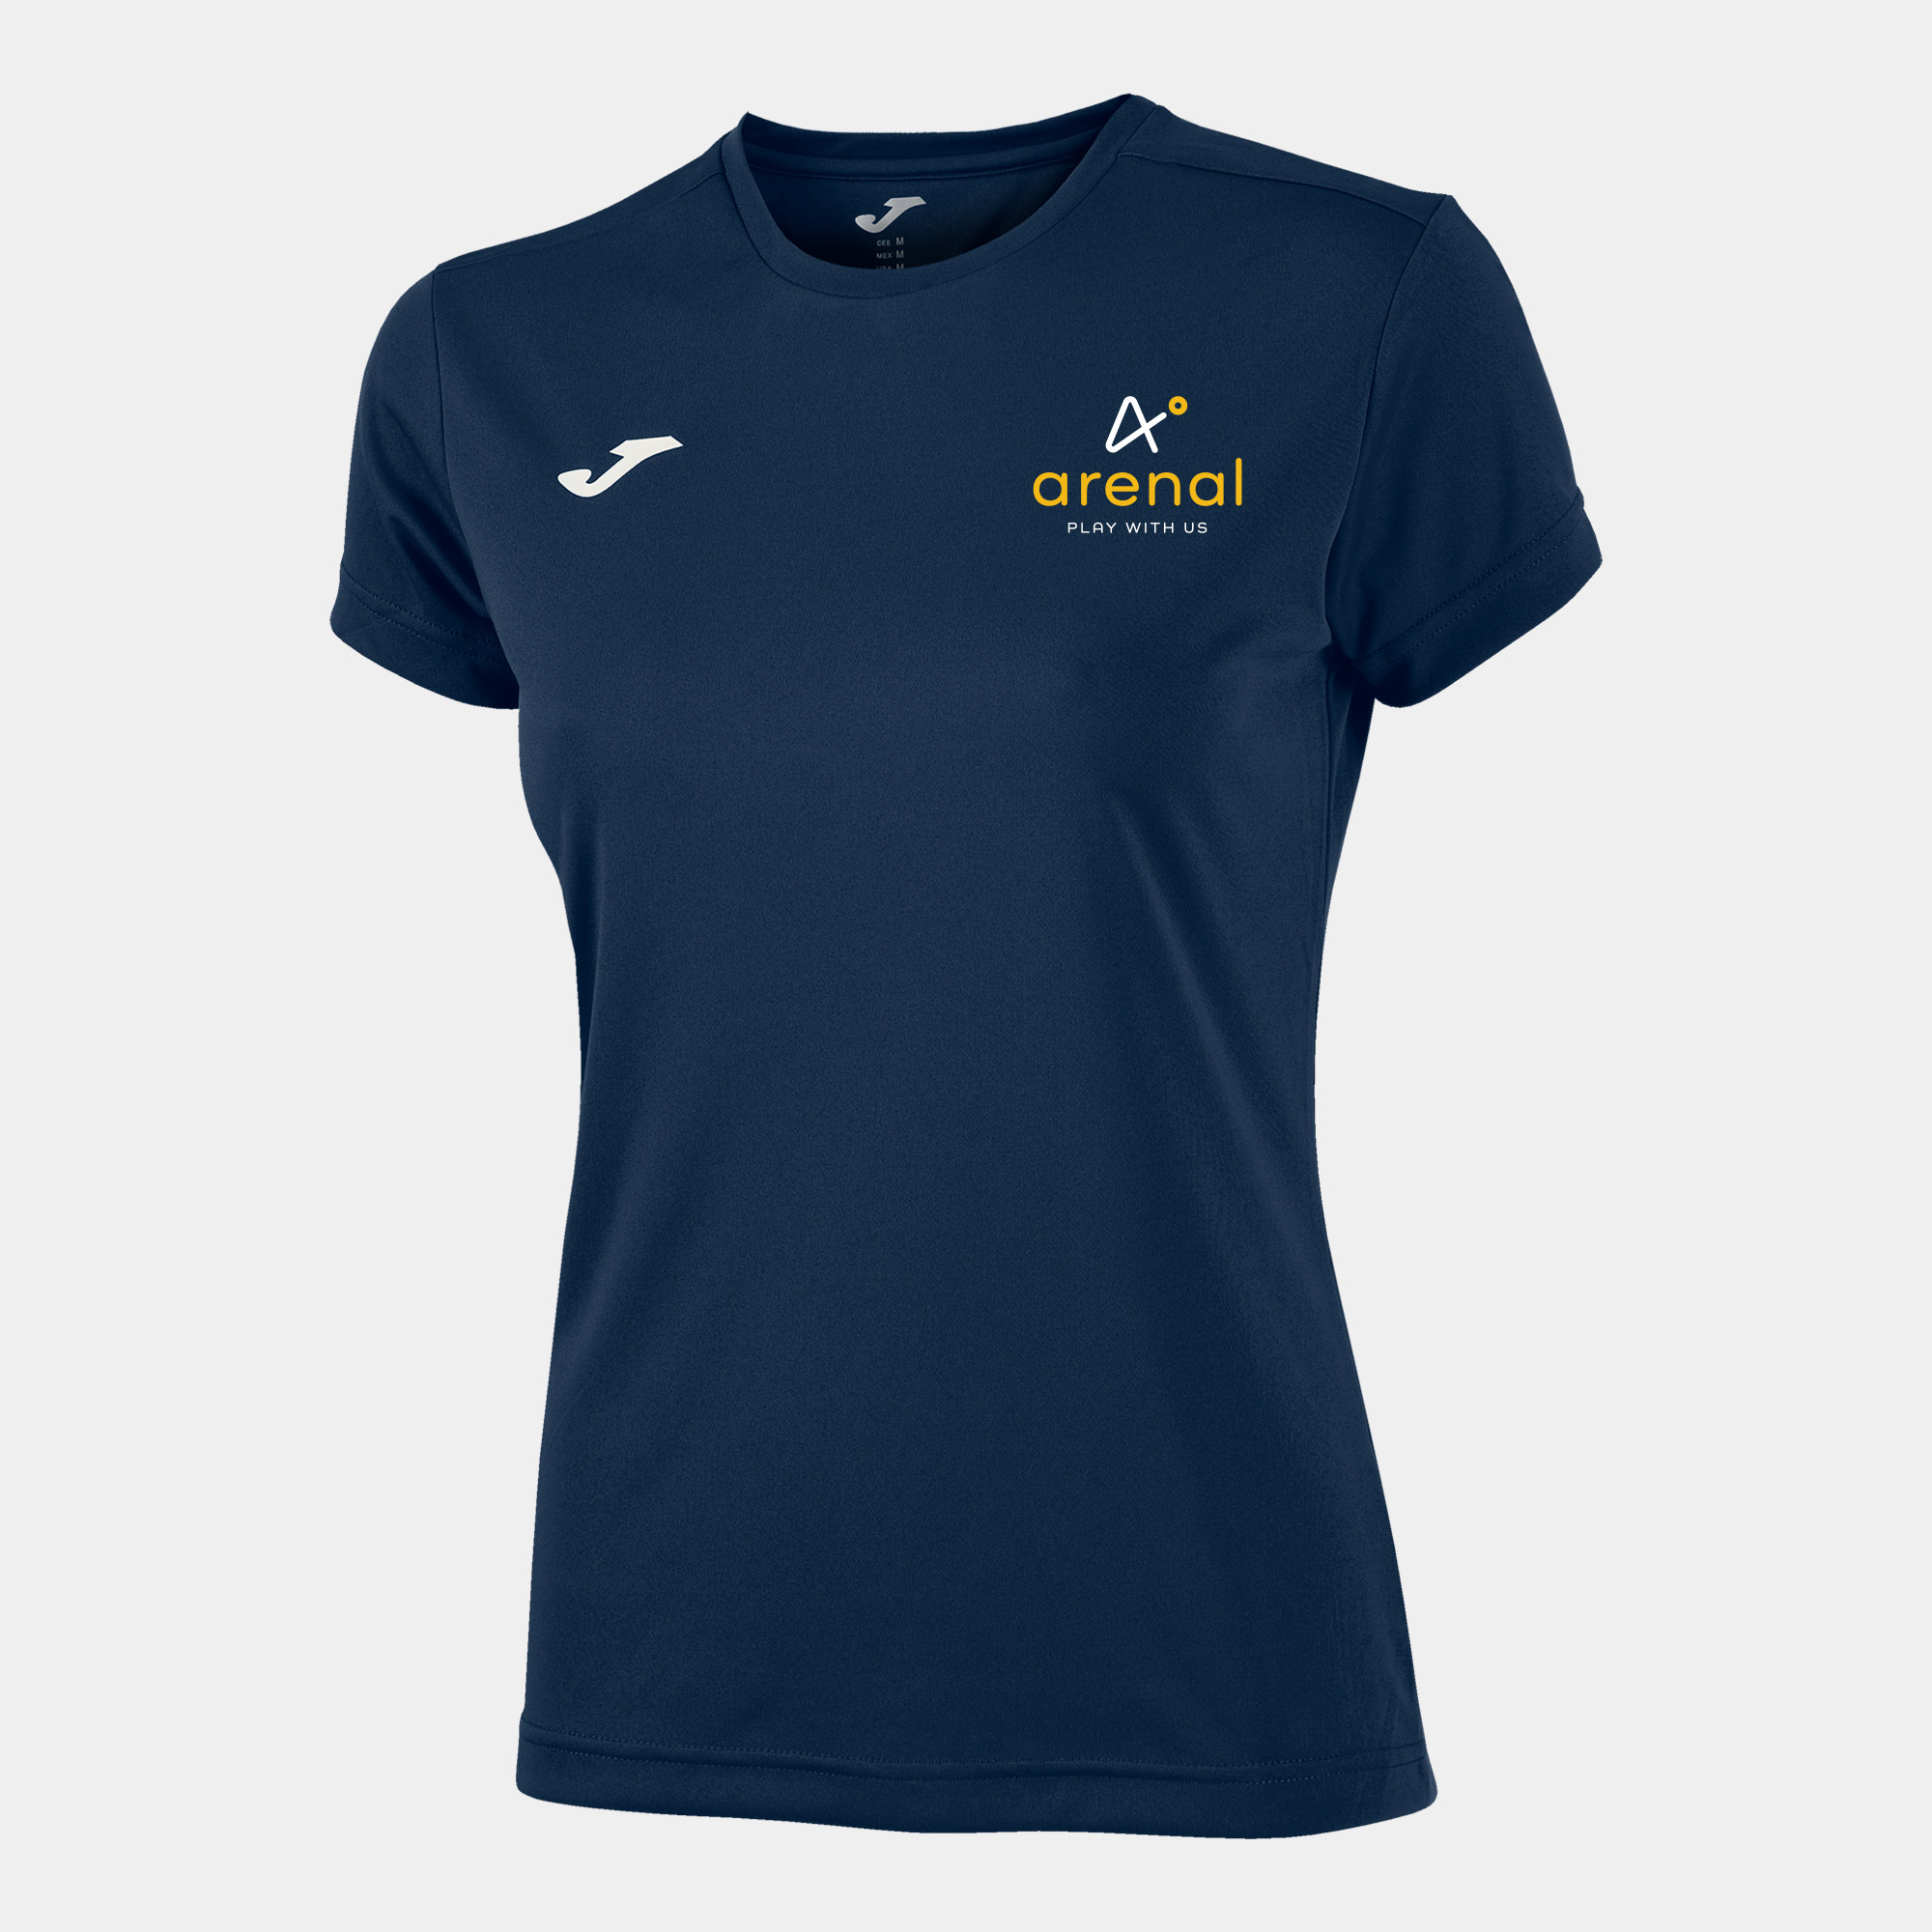 Arenal - Shirt short sleeve woman Combi navy blue